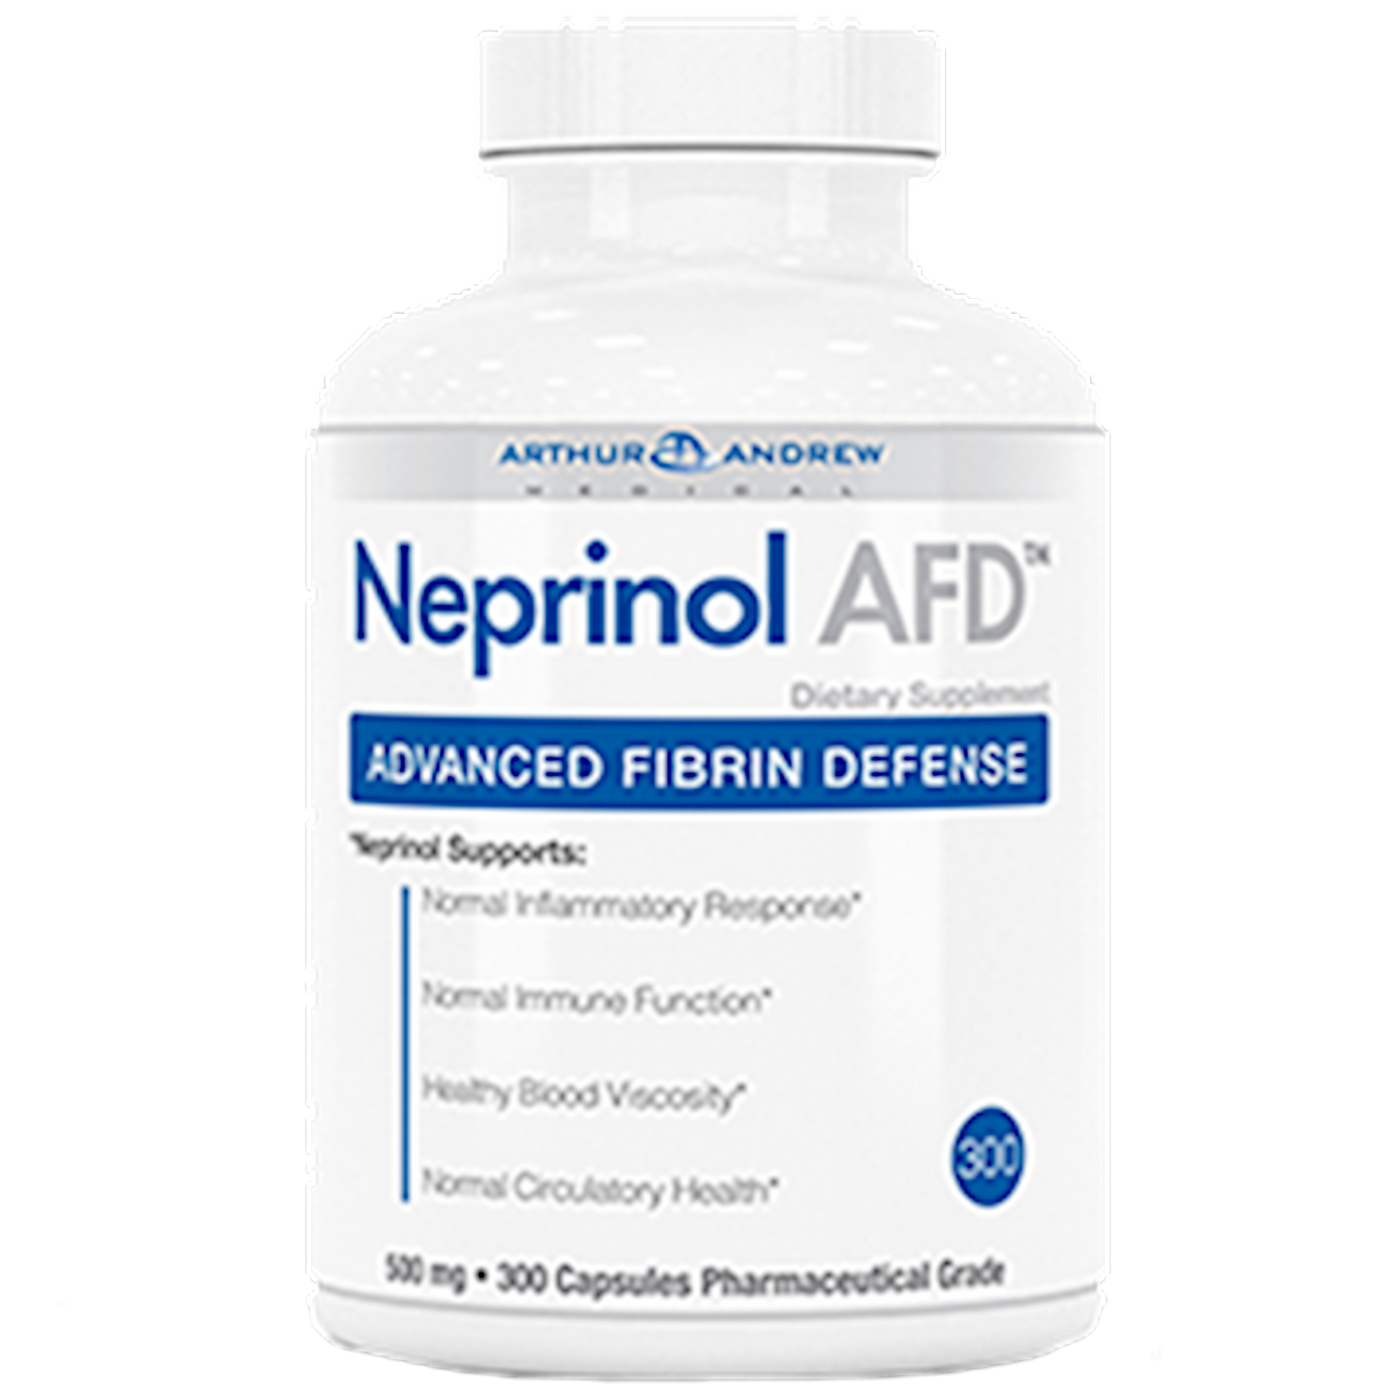 Neprinol AFD  Curated Wellness